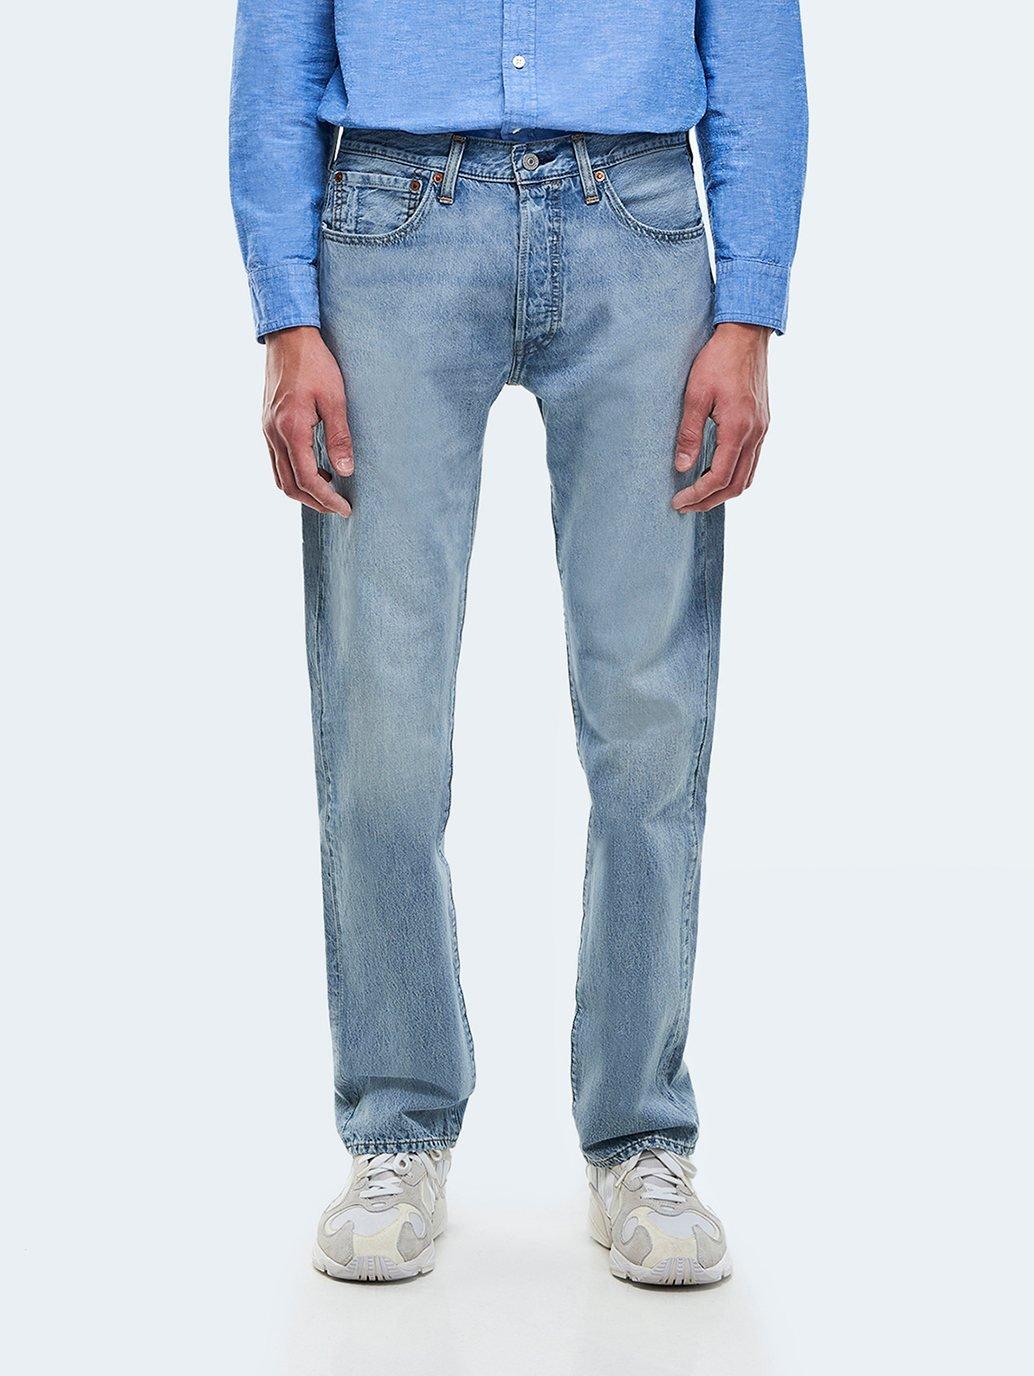 Descubrir 39+ imagen levi's men's 501 stretch jeans - Thptnganamst.edu.vn